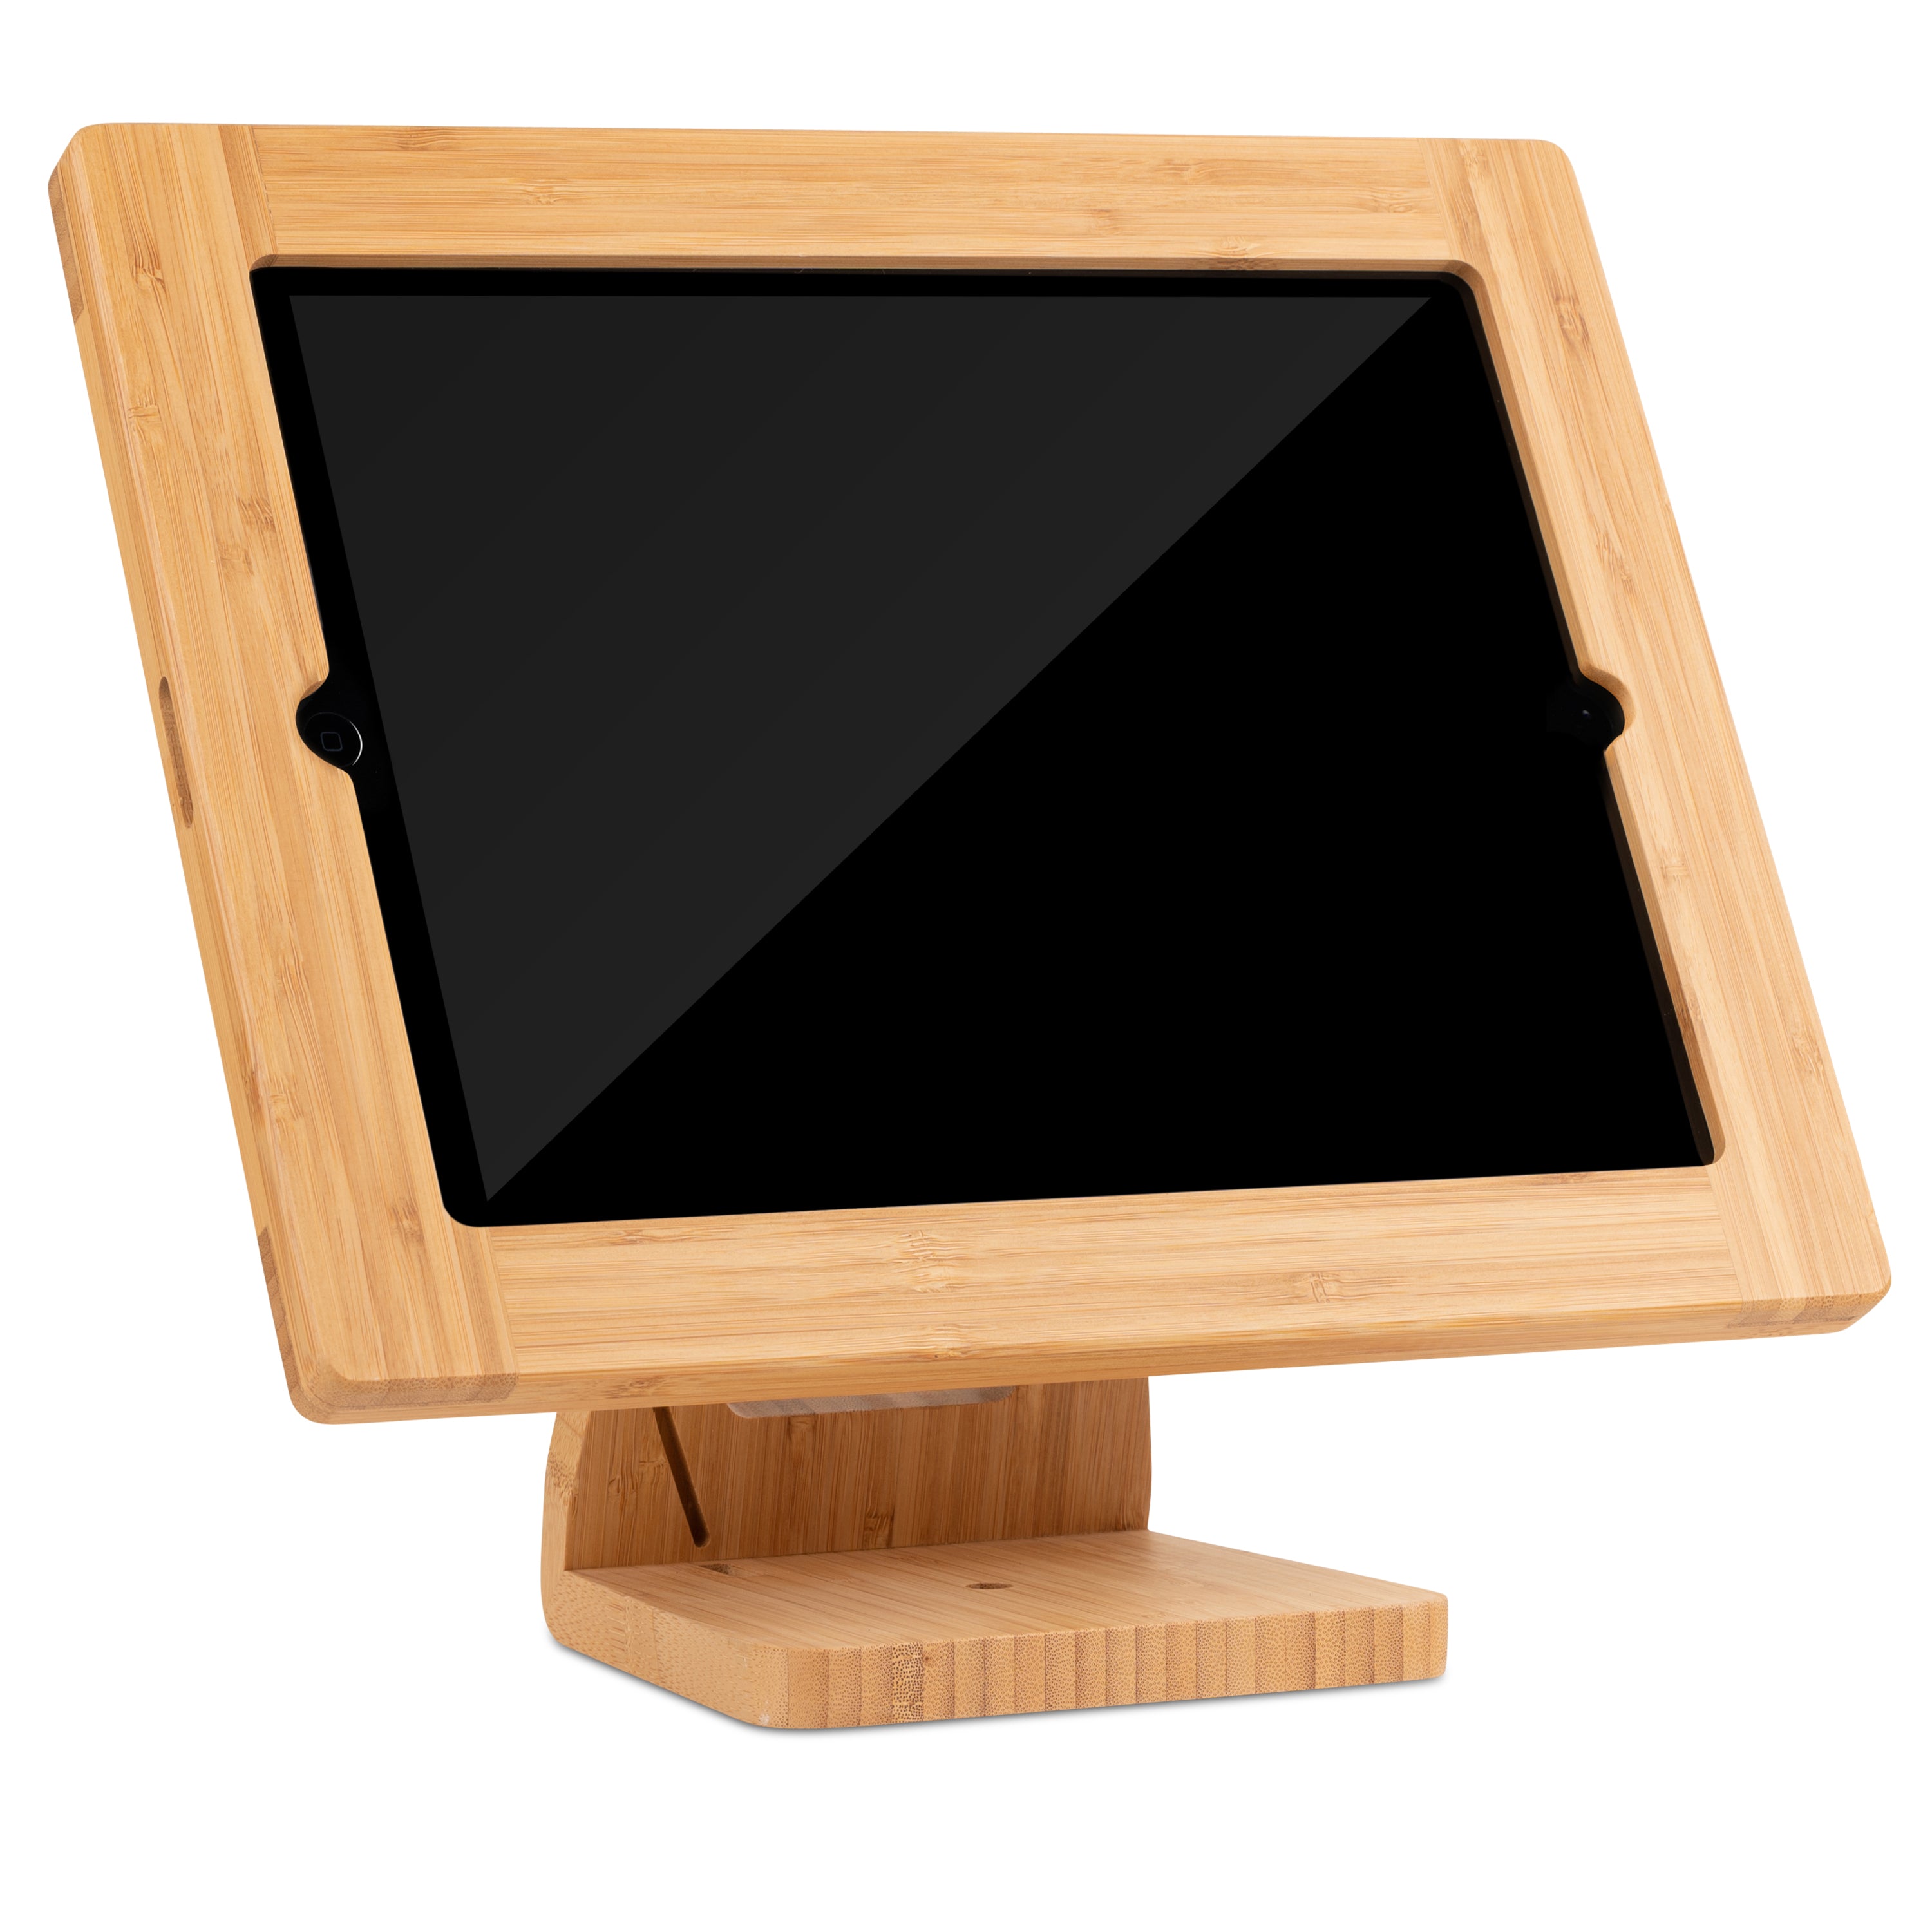 Freeform Made iPad Frame Stands Bamboo / 10.2 & 10.5 iPad